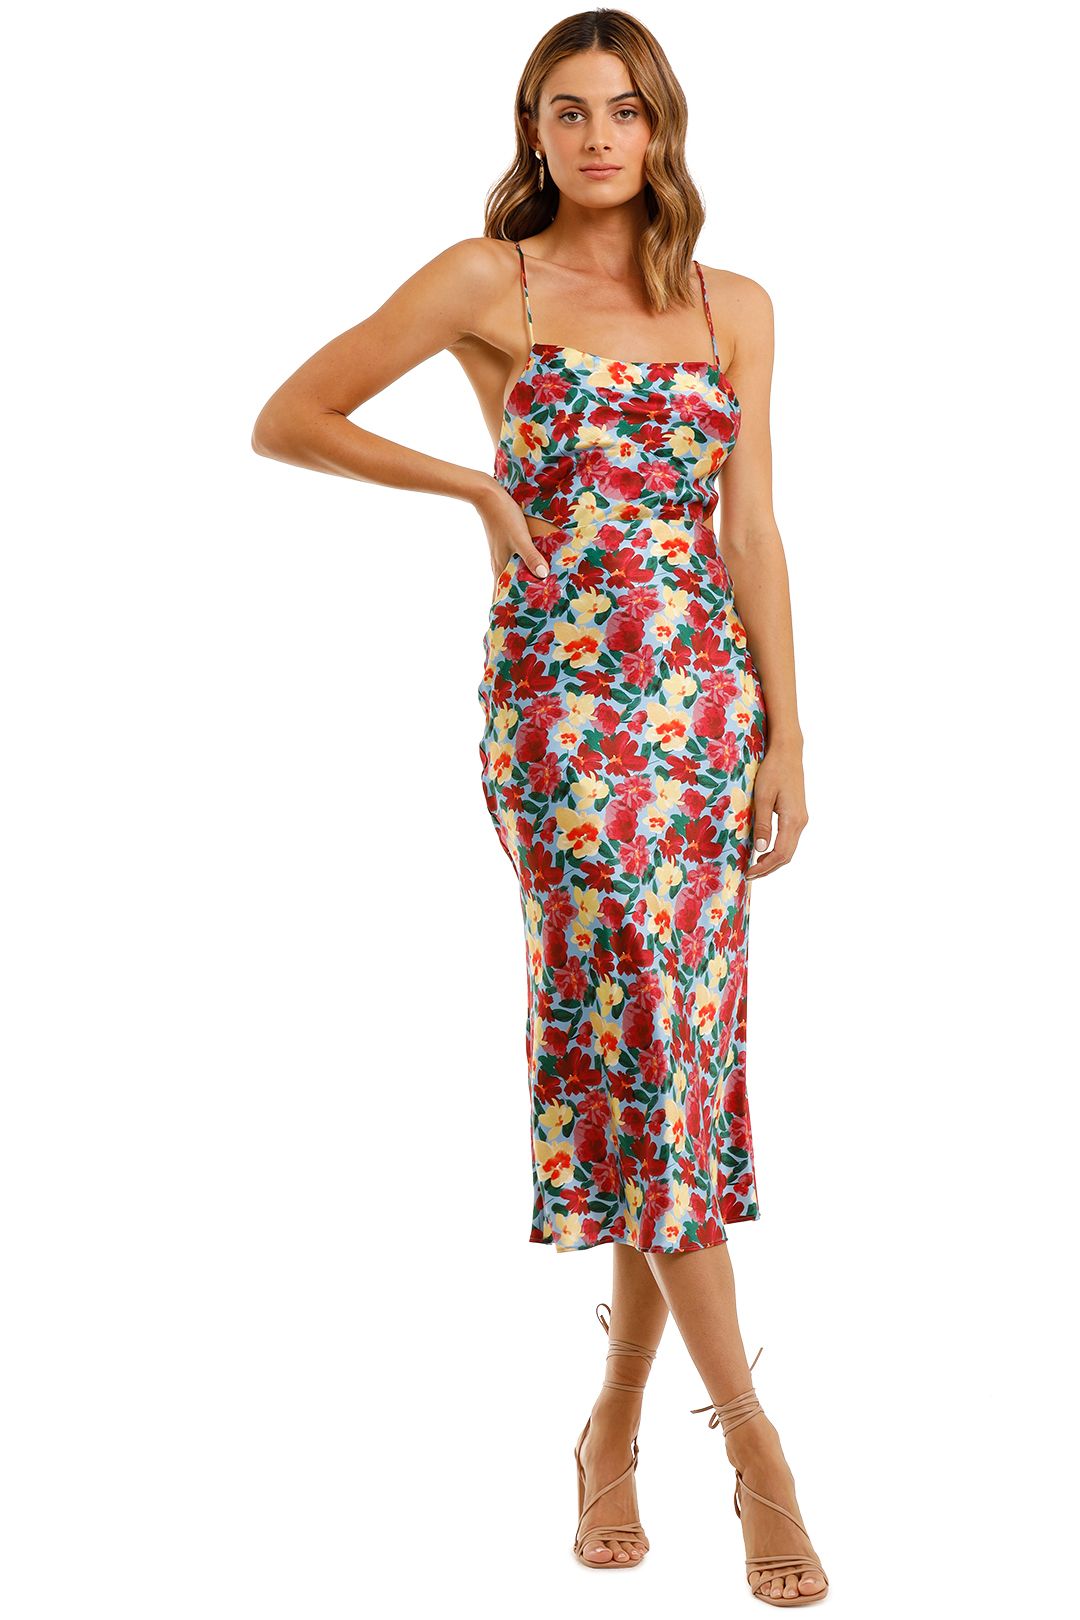 Merengue Midi Dress - Tropicana Floral by Talulah for Rent | GlamCorner